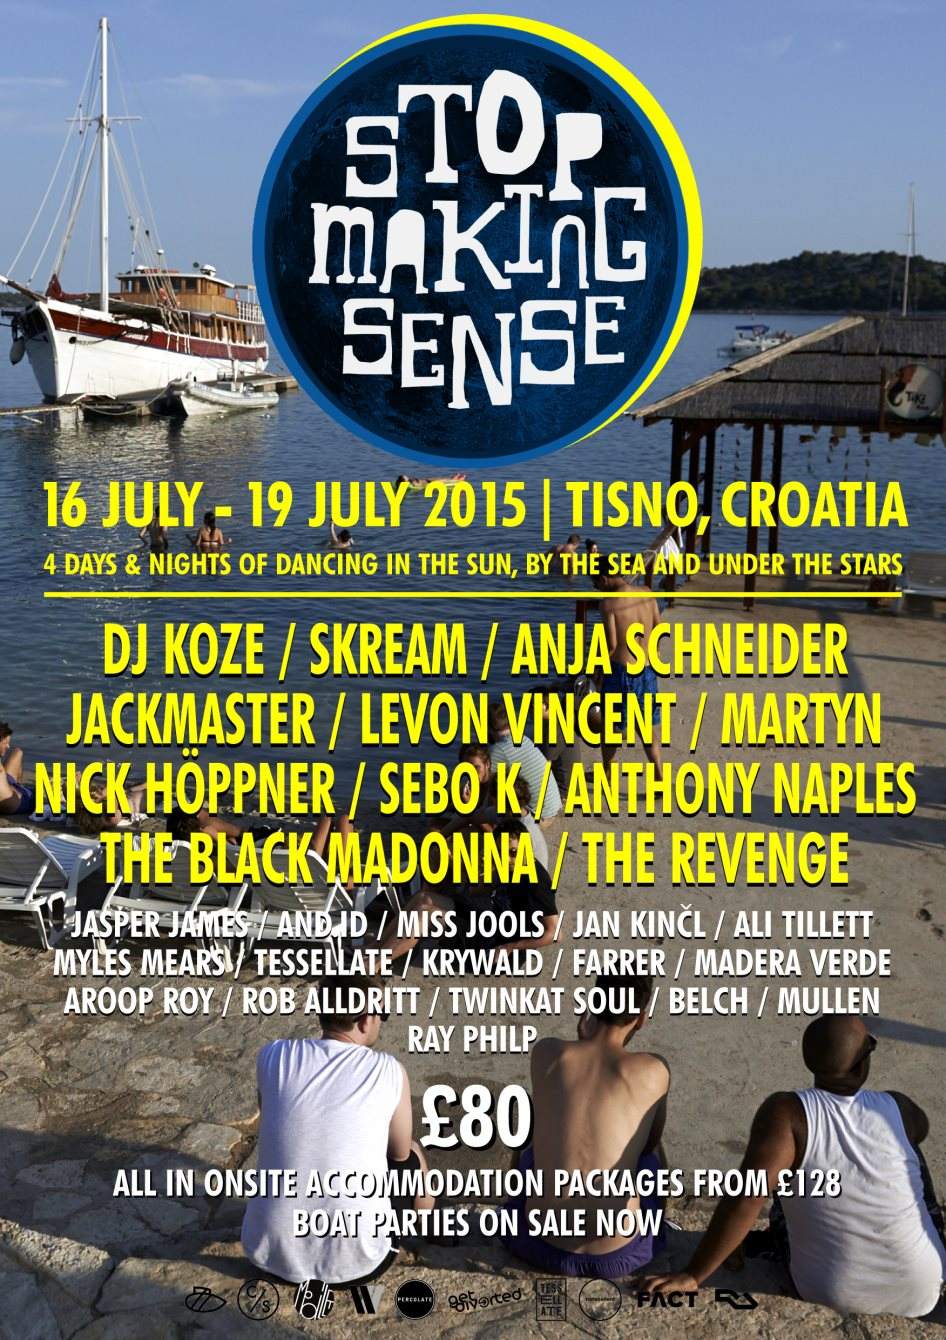 Stop Making Sense - Sub Club - Sunset Boat Party - Página trasera